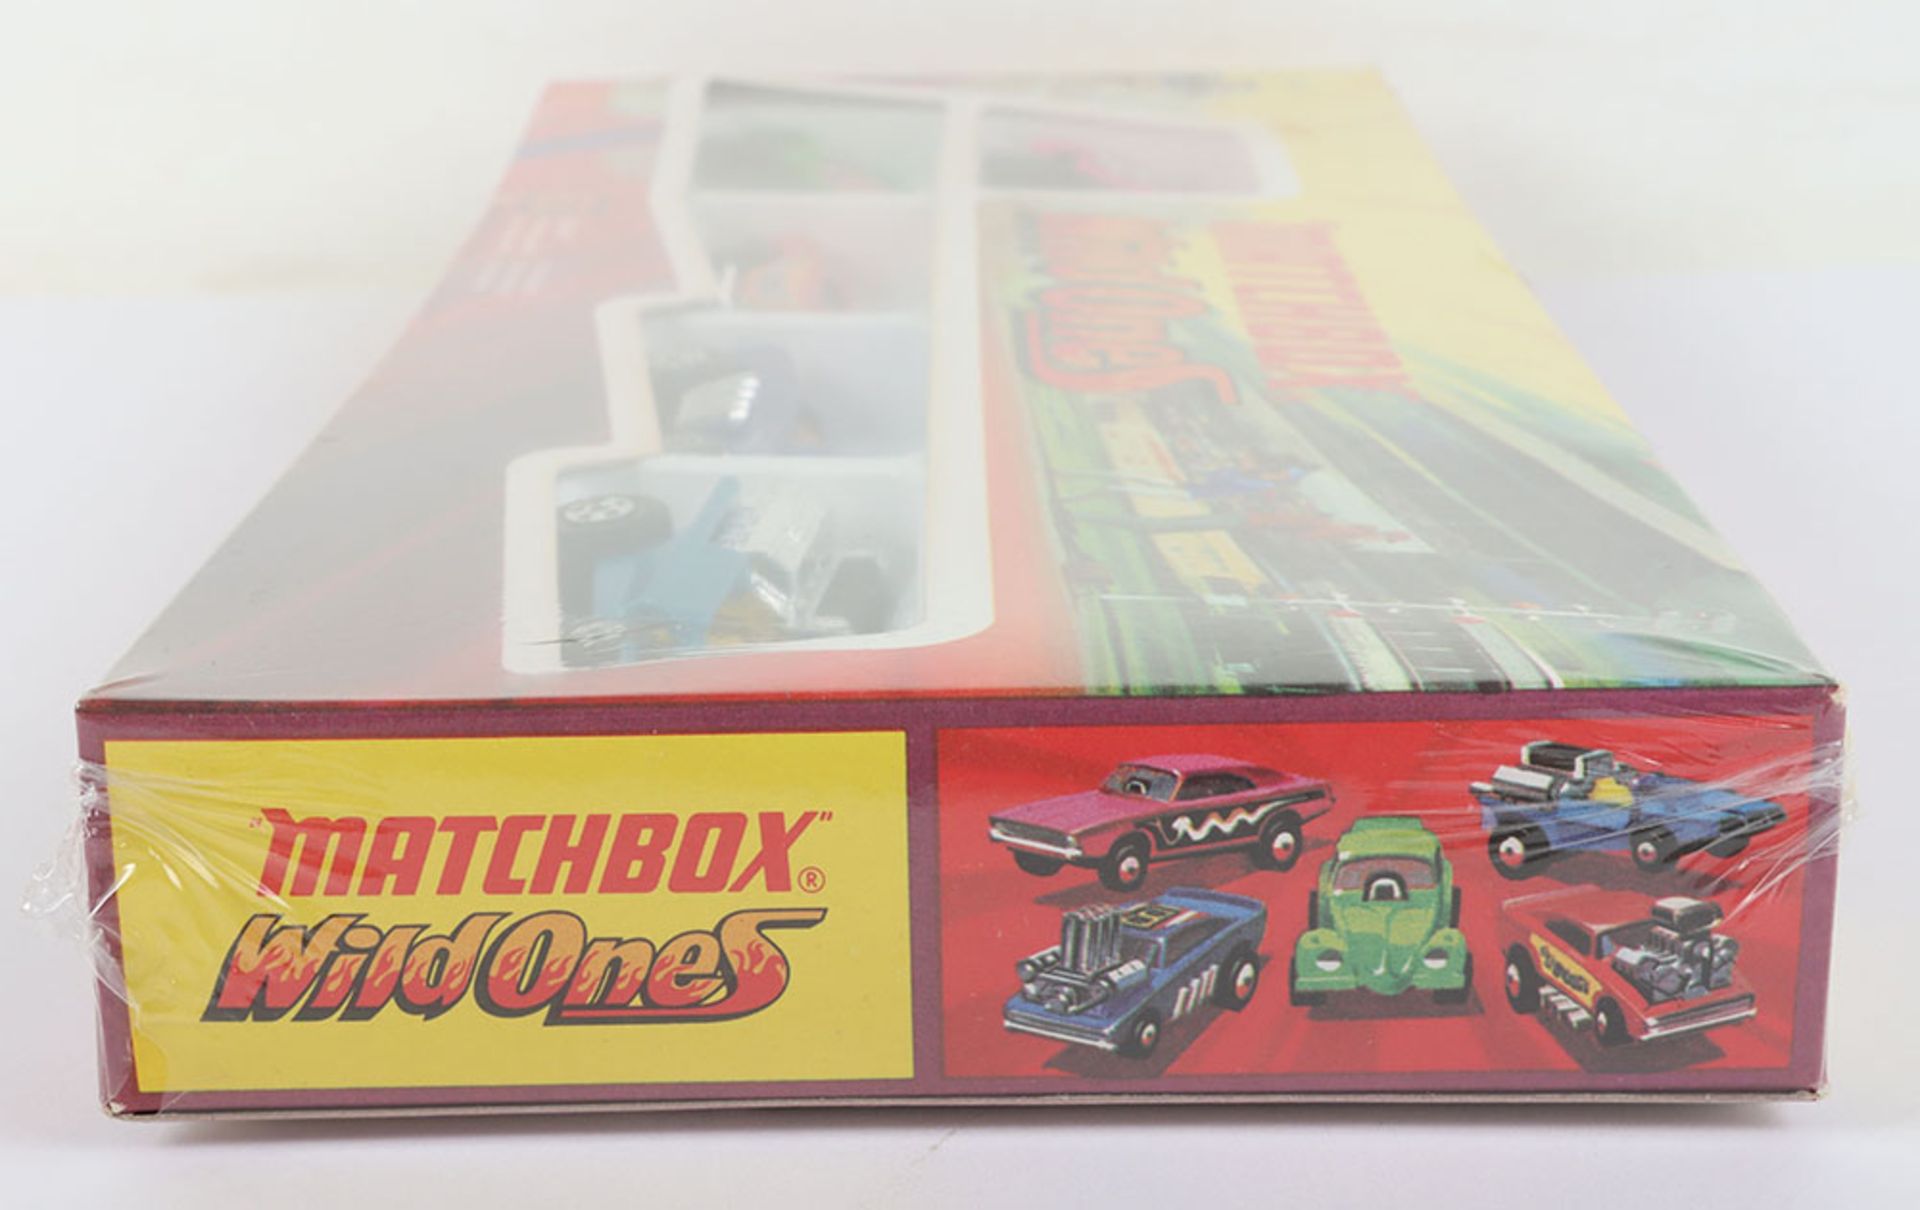 Matchbox Lesney G-3 Wild-ones Superfast Dragster Gift Set - Image 5 of 9